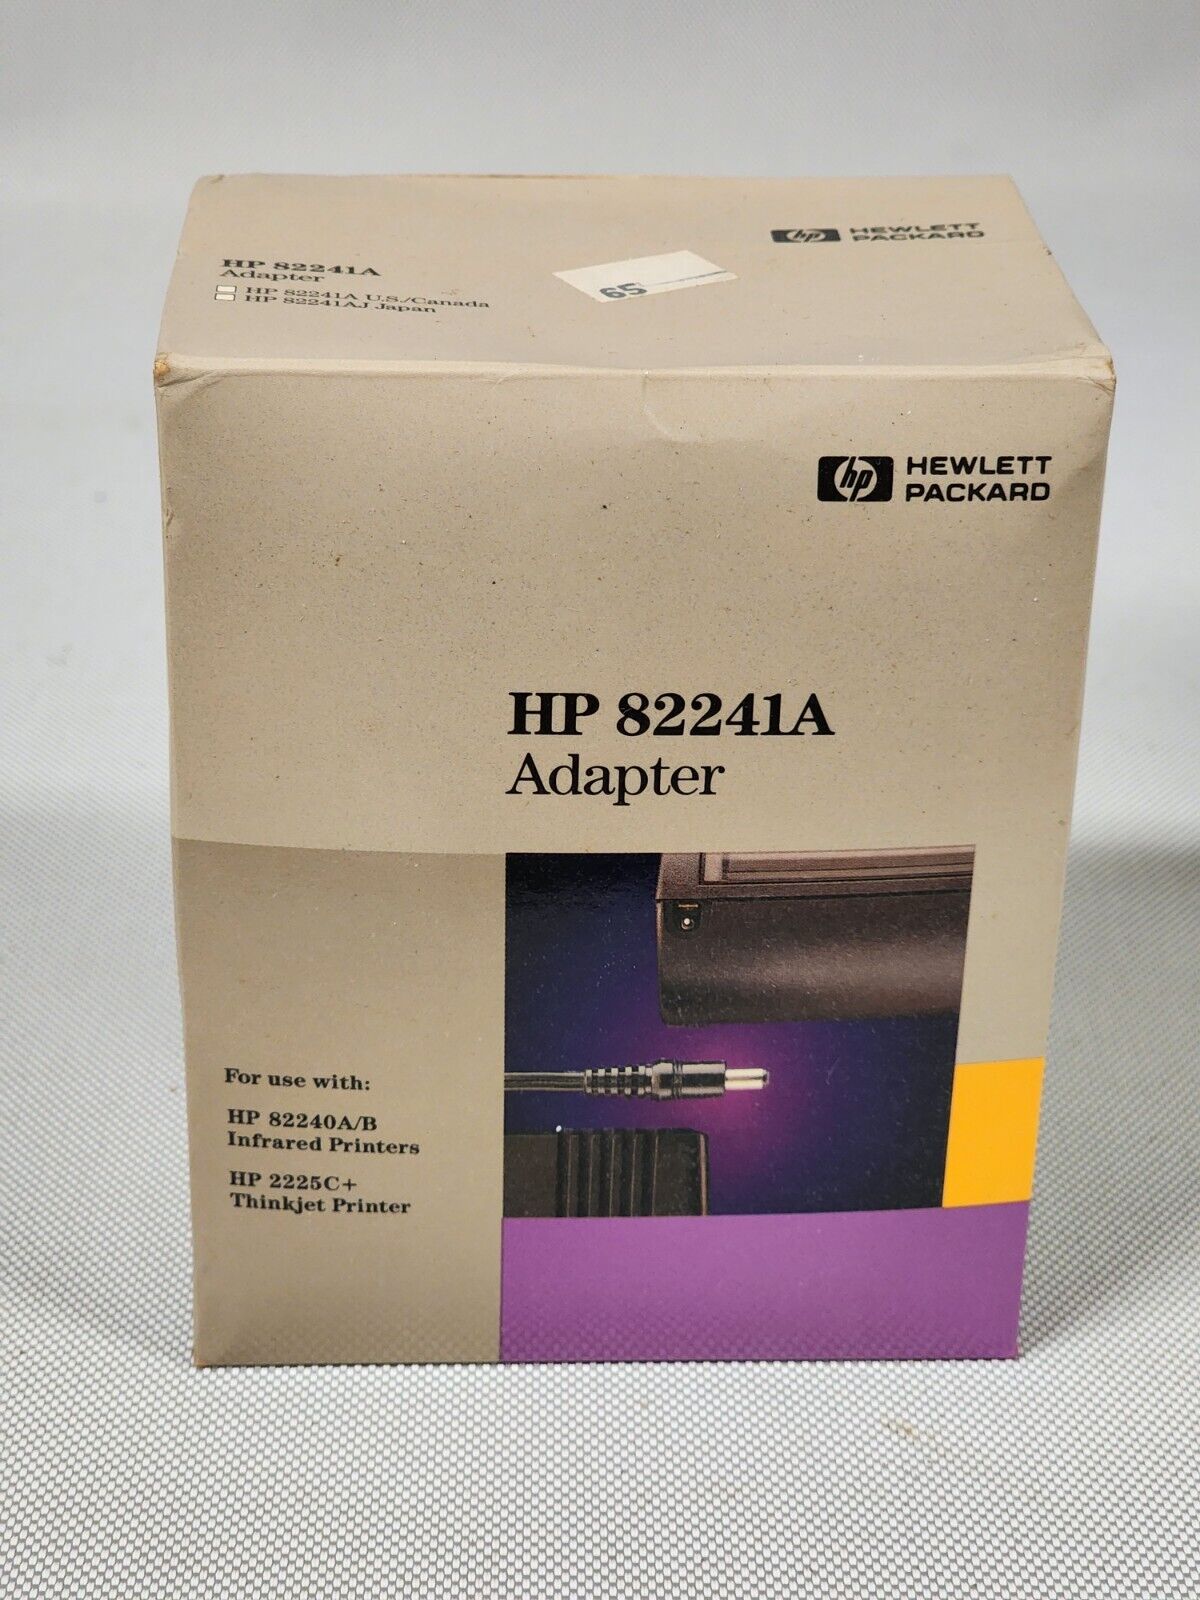 HP 82241A AC Adapter For HP 82240a/b & HP 2225c+ Old Stock With Original Box